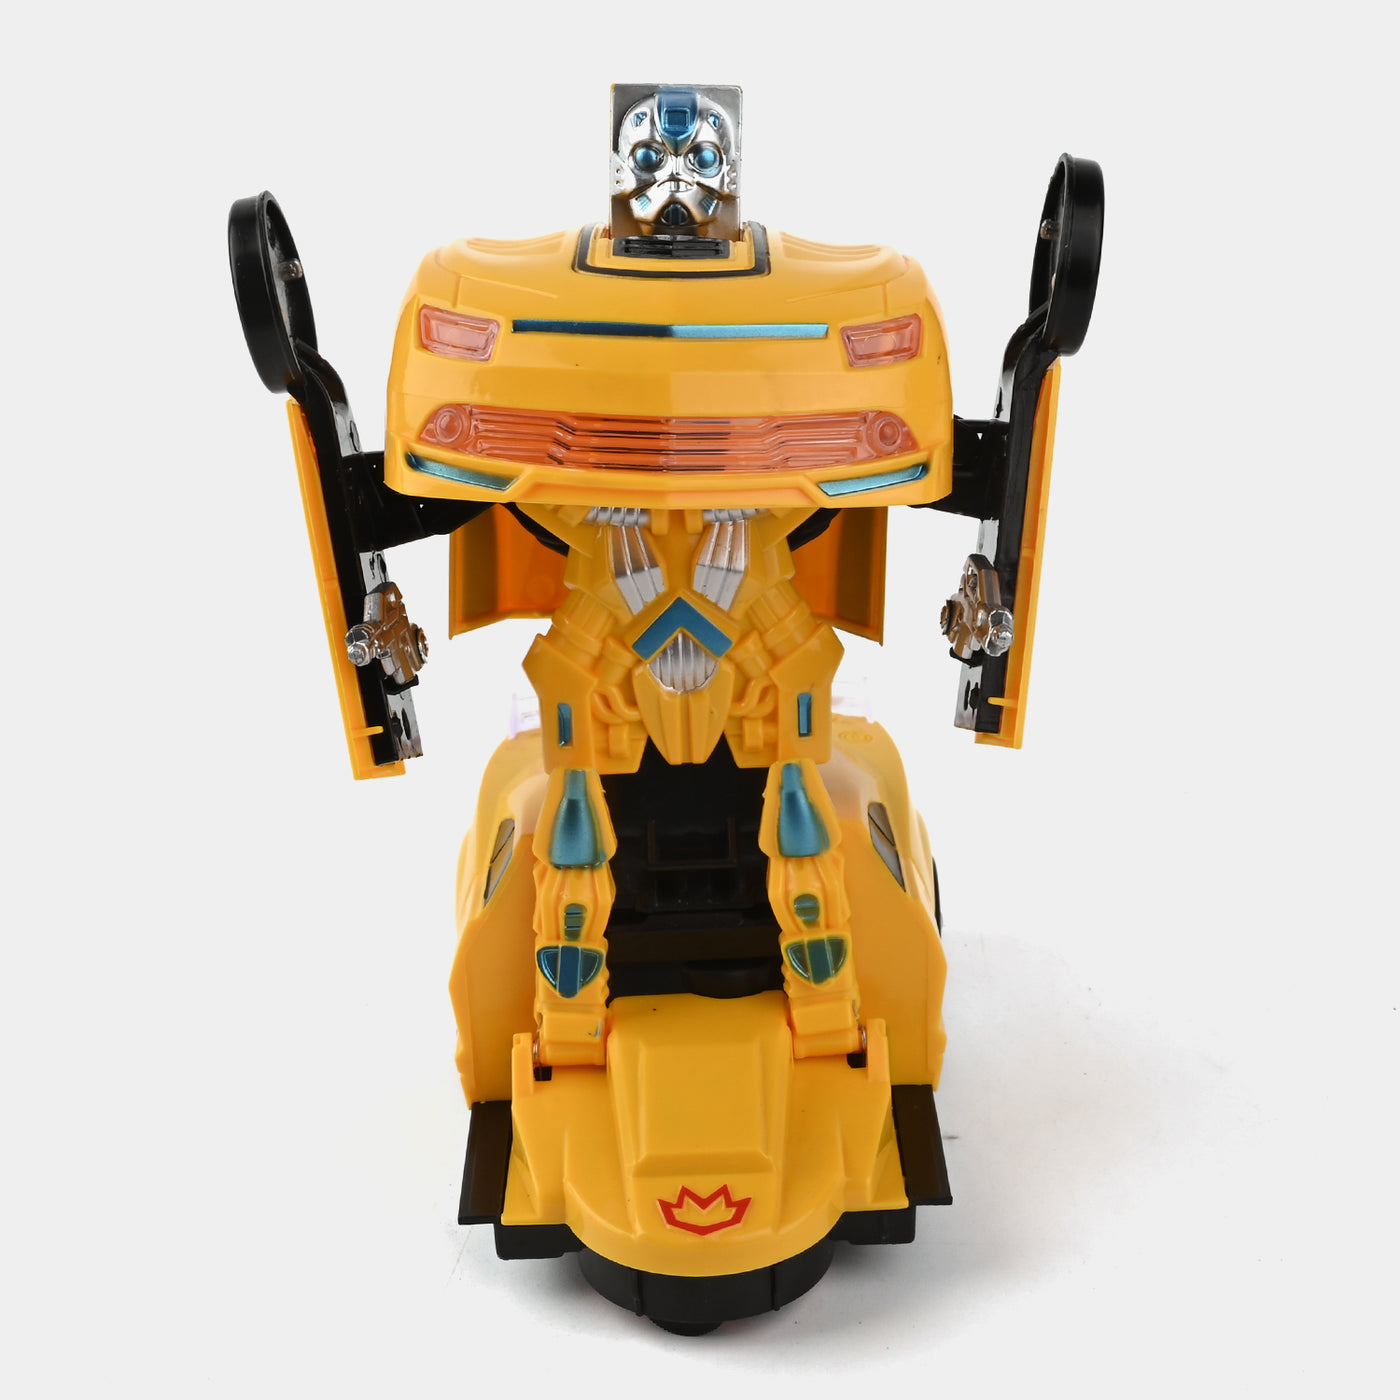 Robot Transformer Car For Kids